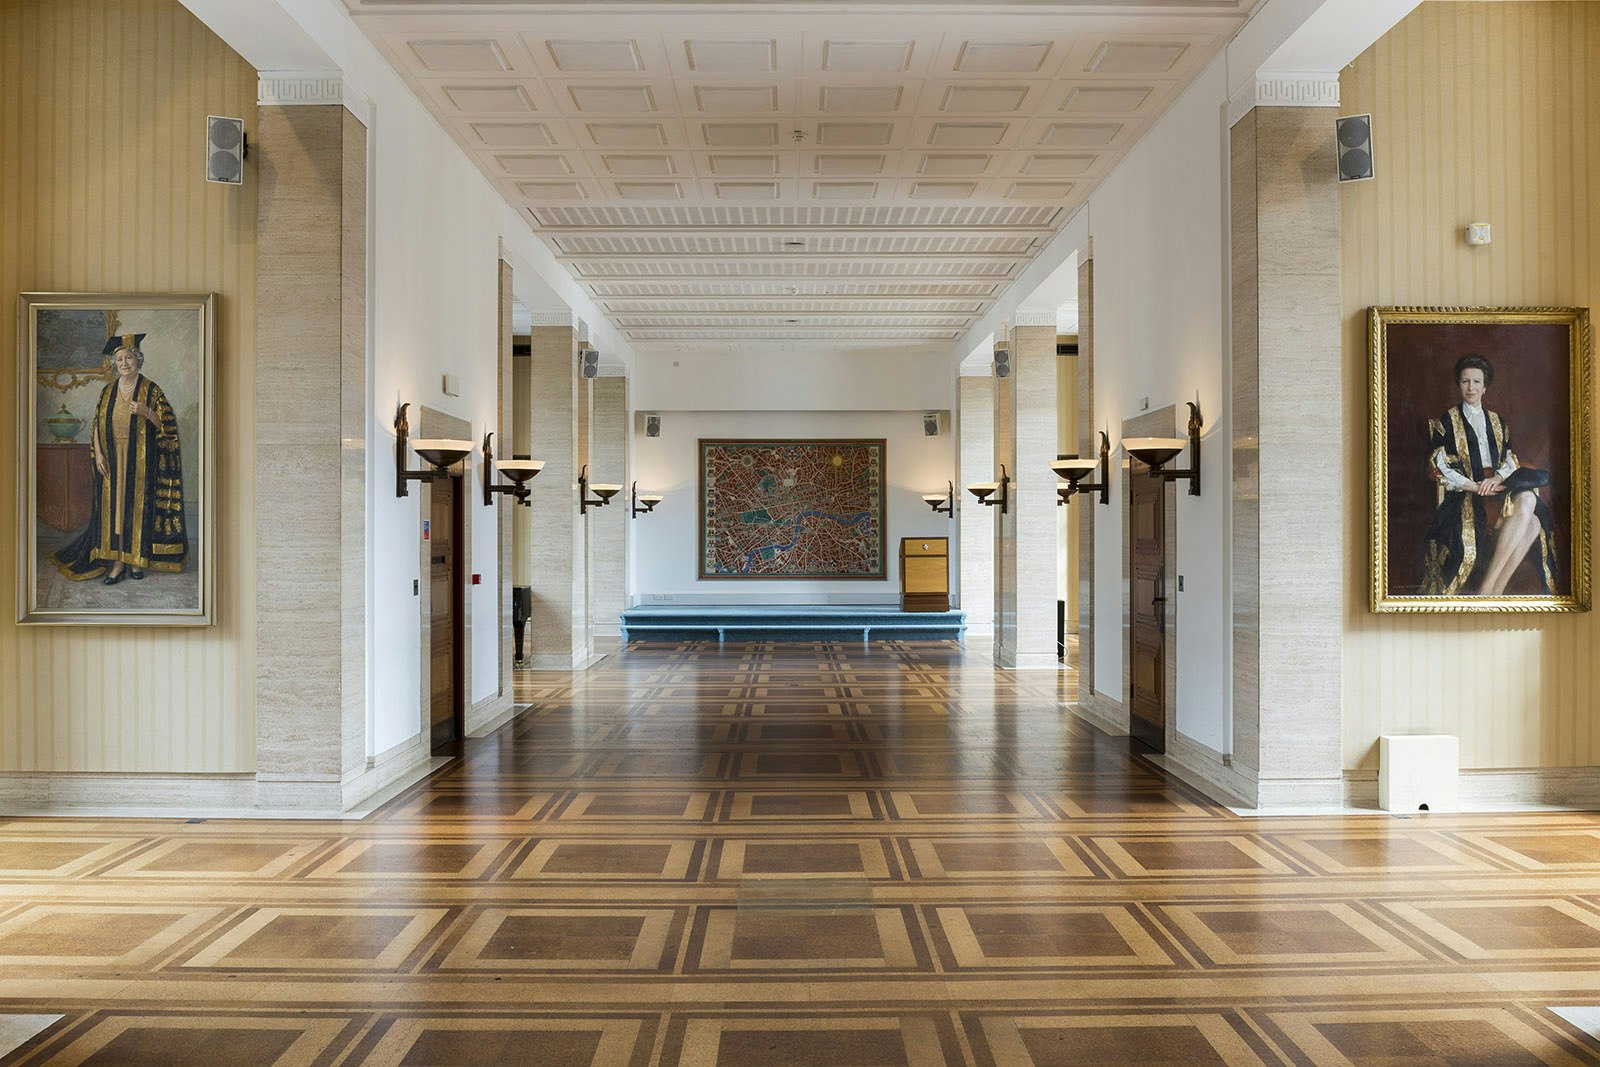 University of London Venues - Chancellor's Hall image 3